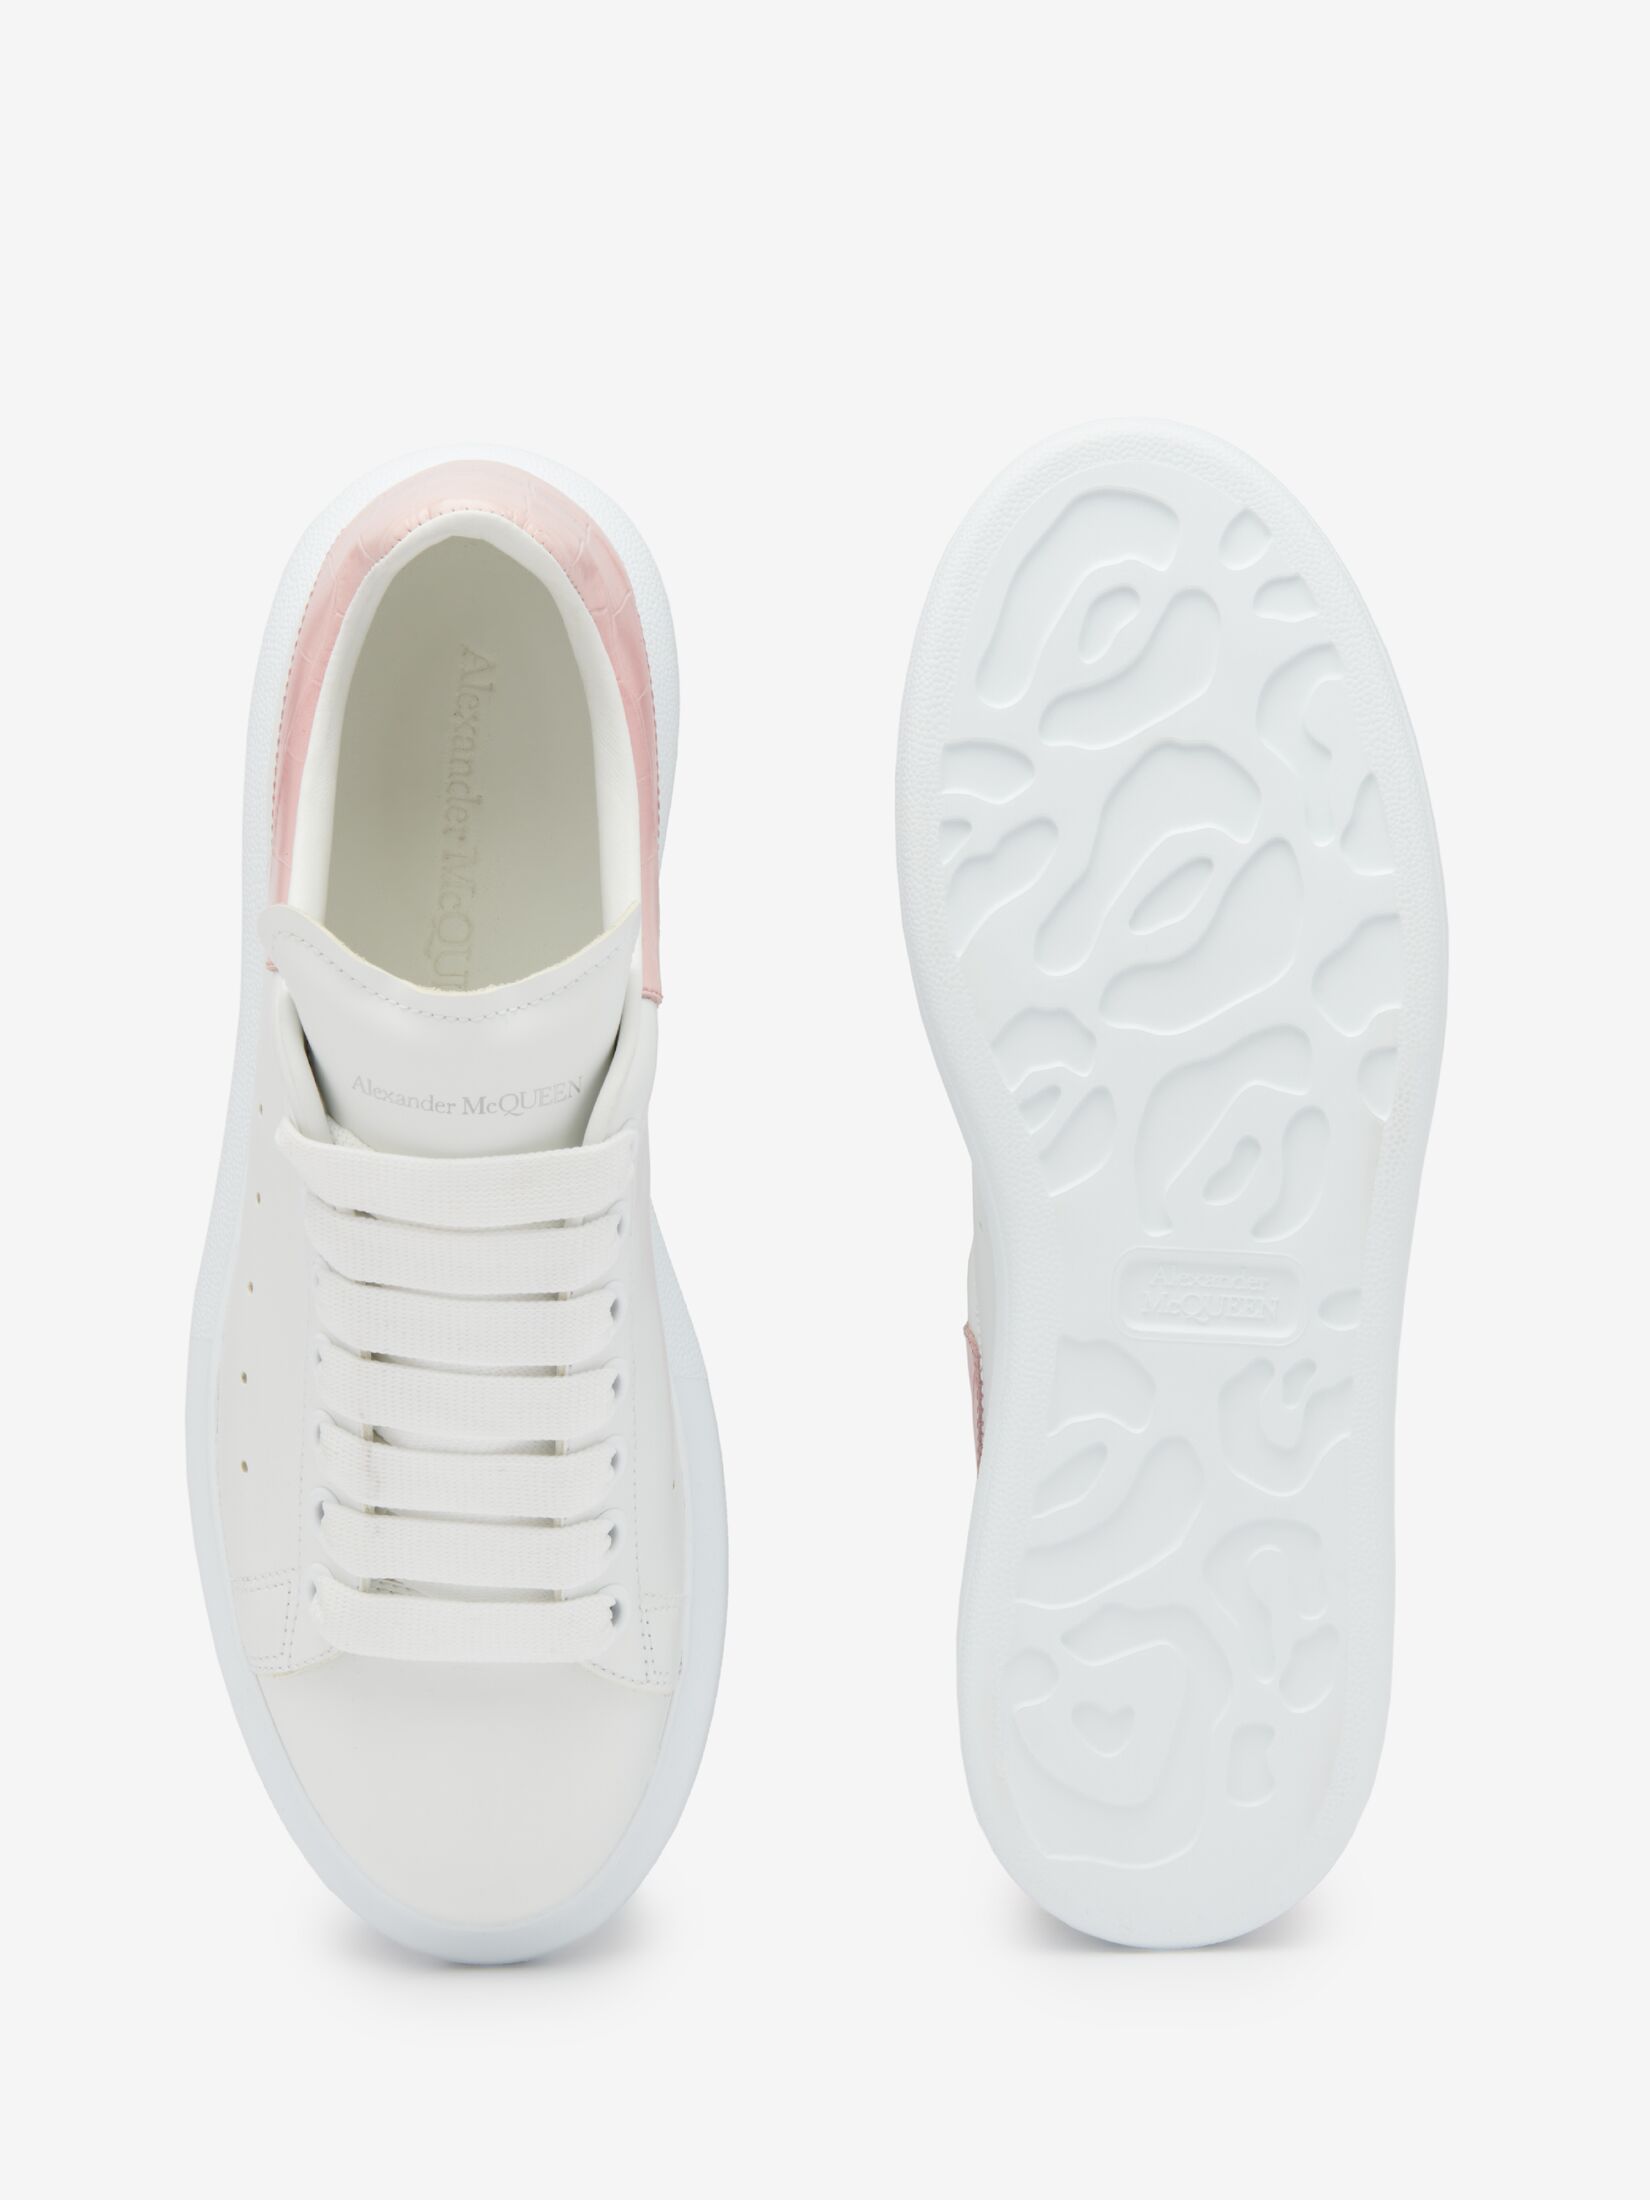 Oversized Sneaker in White/Clay | Alexander McQueen US